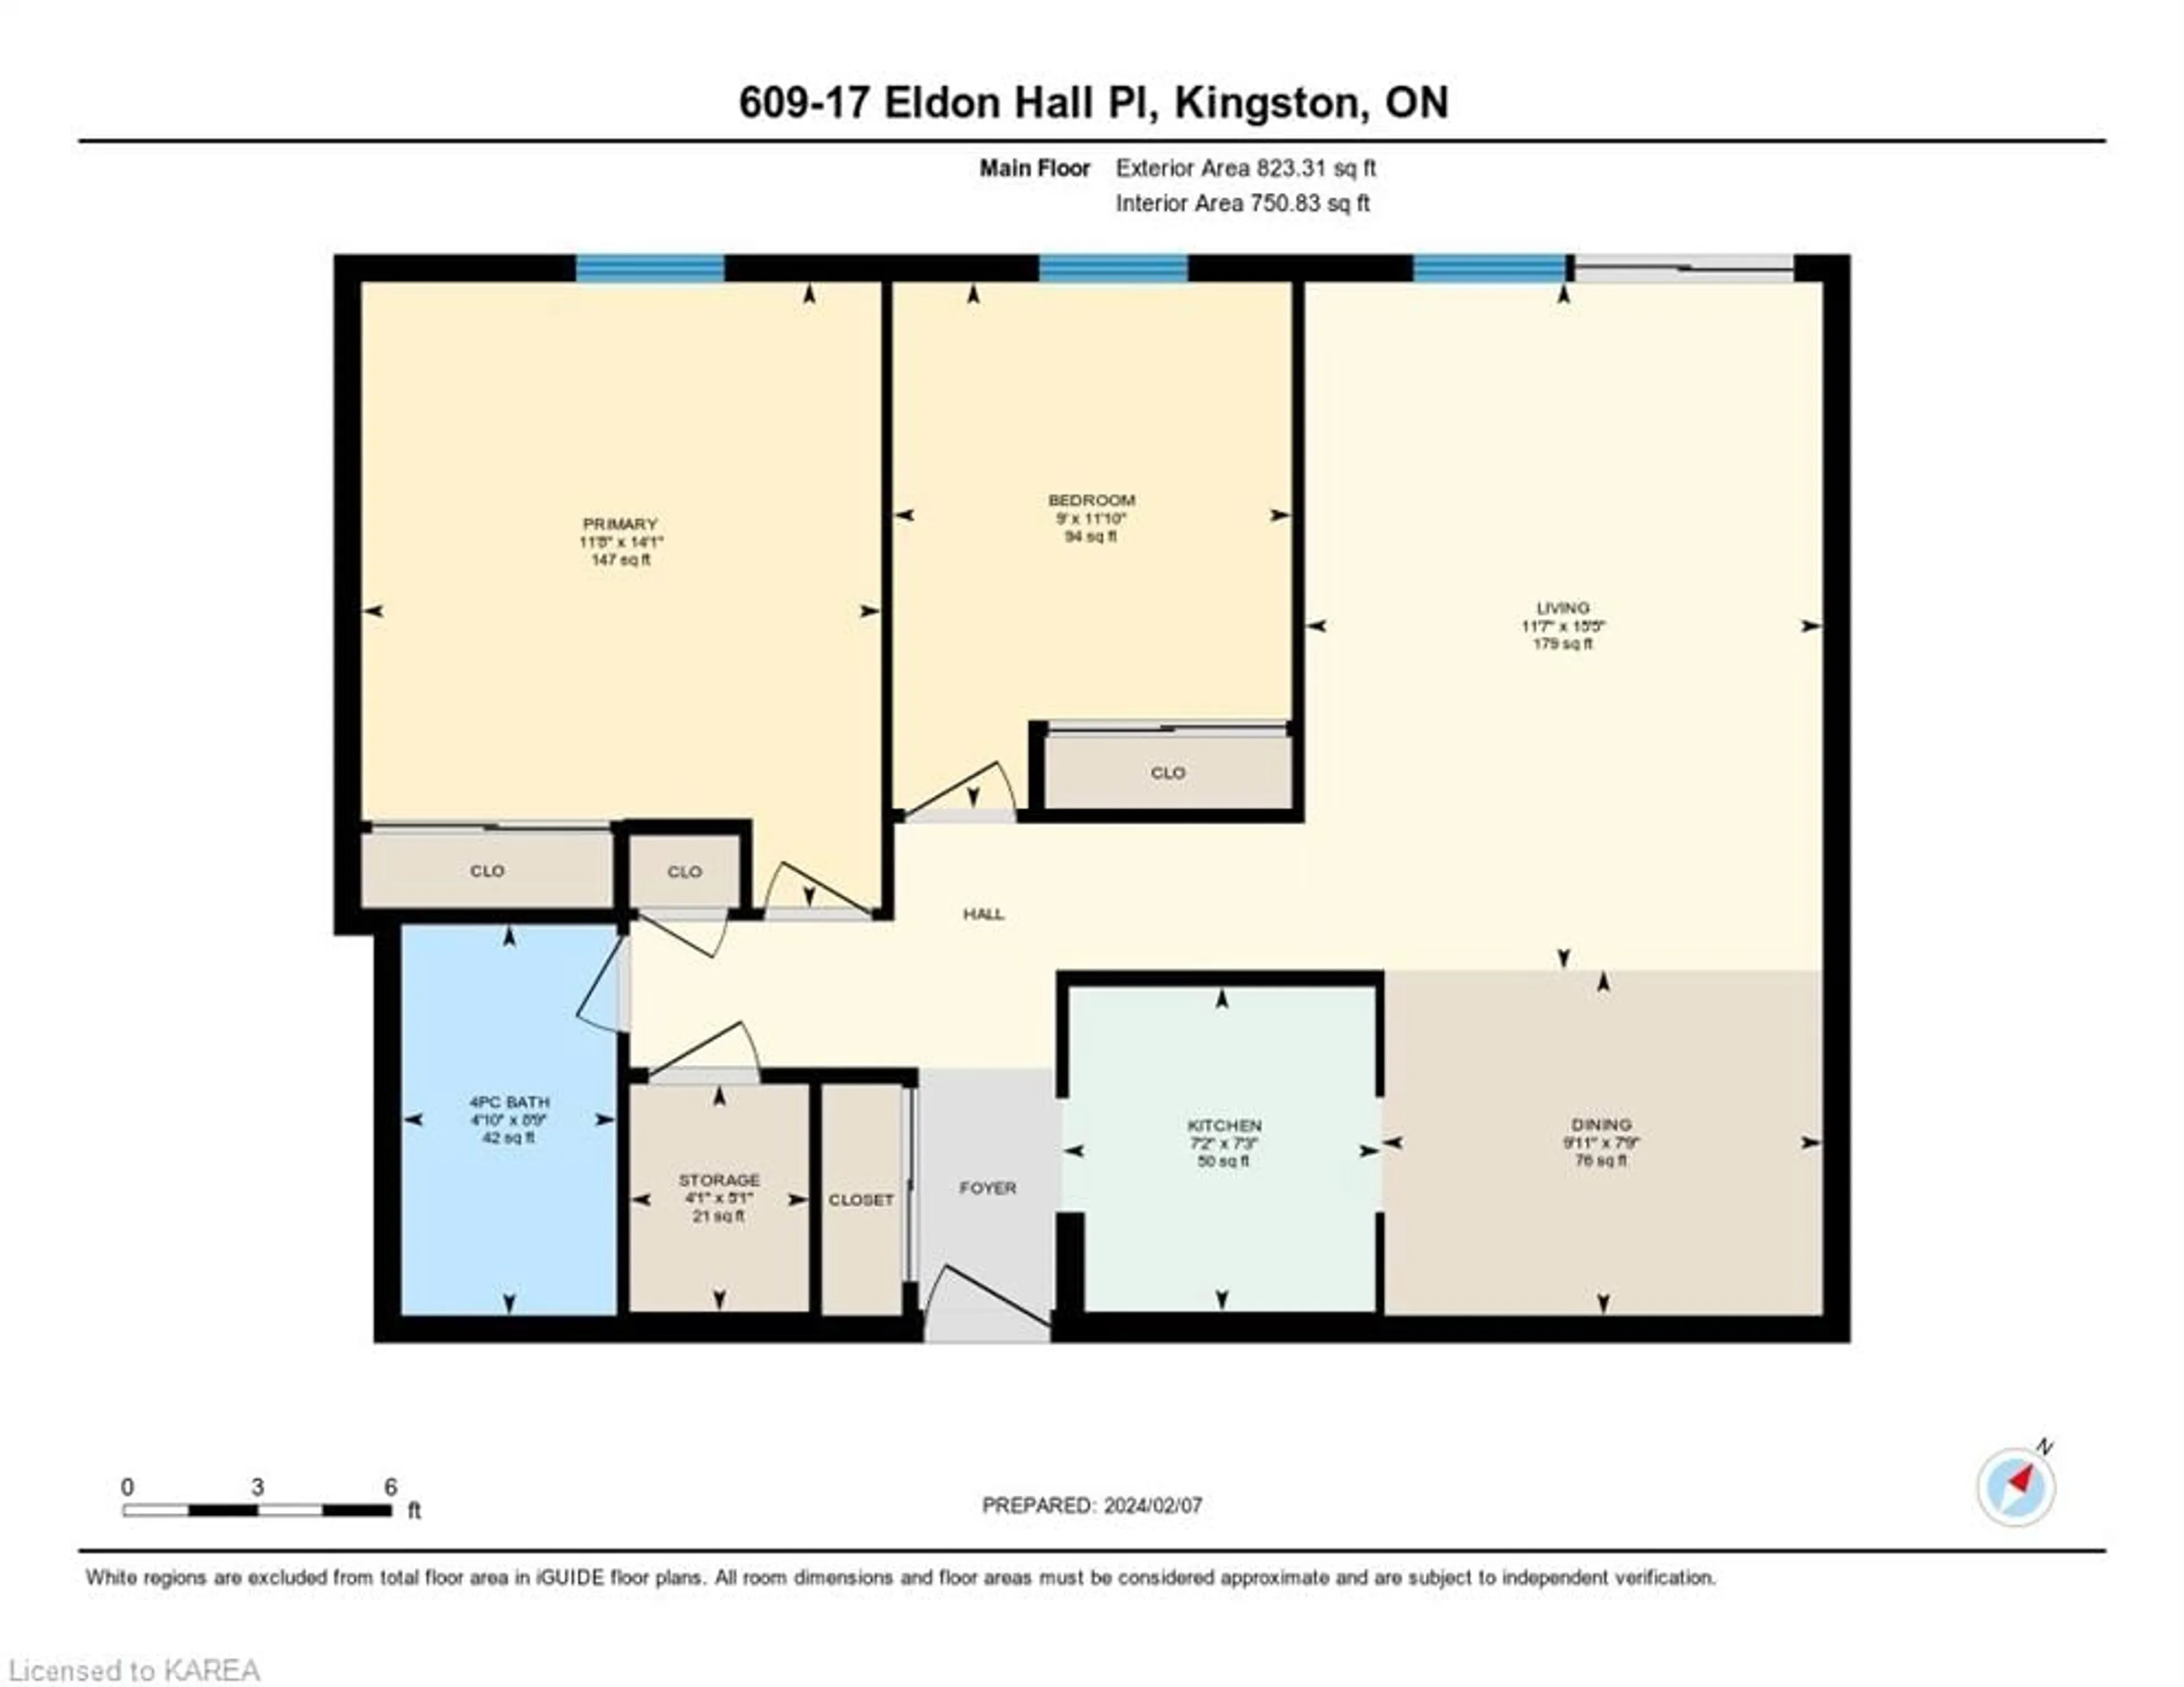 Floor plan for 17 Eldon Hall Pl #609, Kingston Ontario K7M 7H5